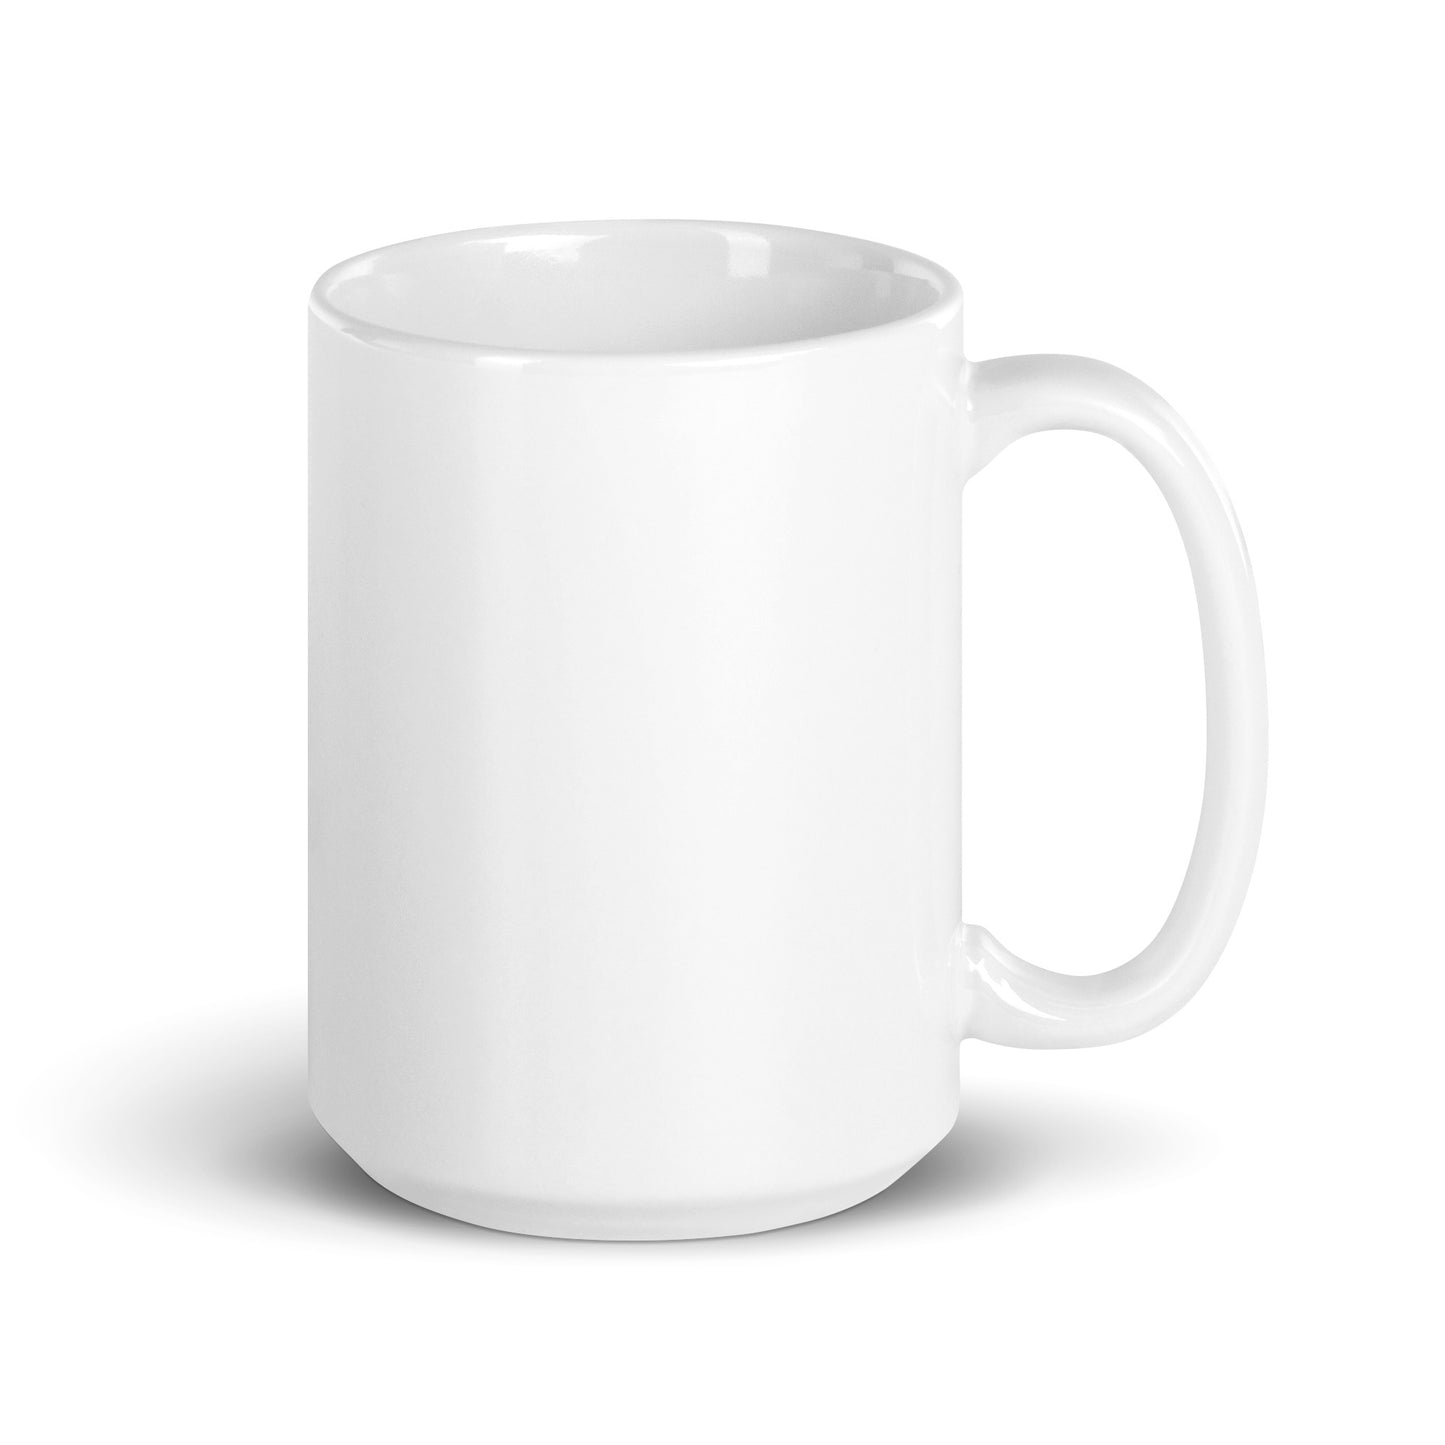 Season of the Bitch mug